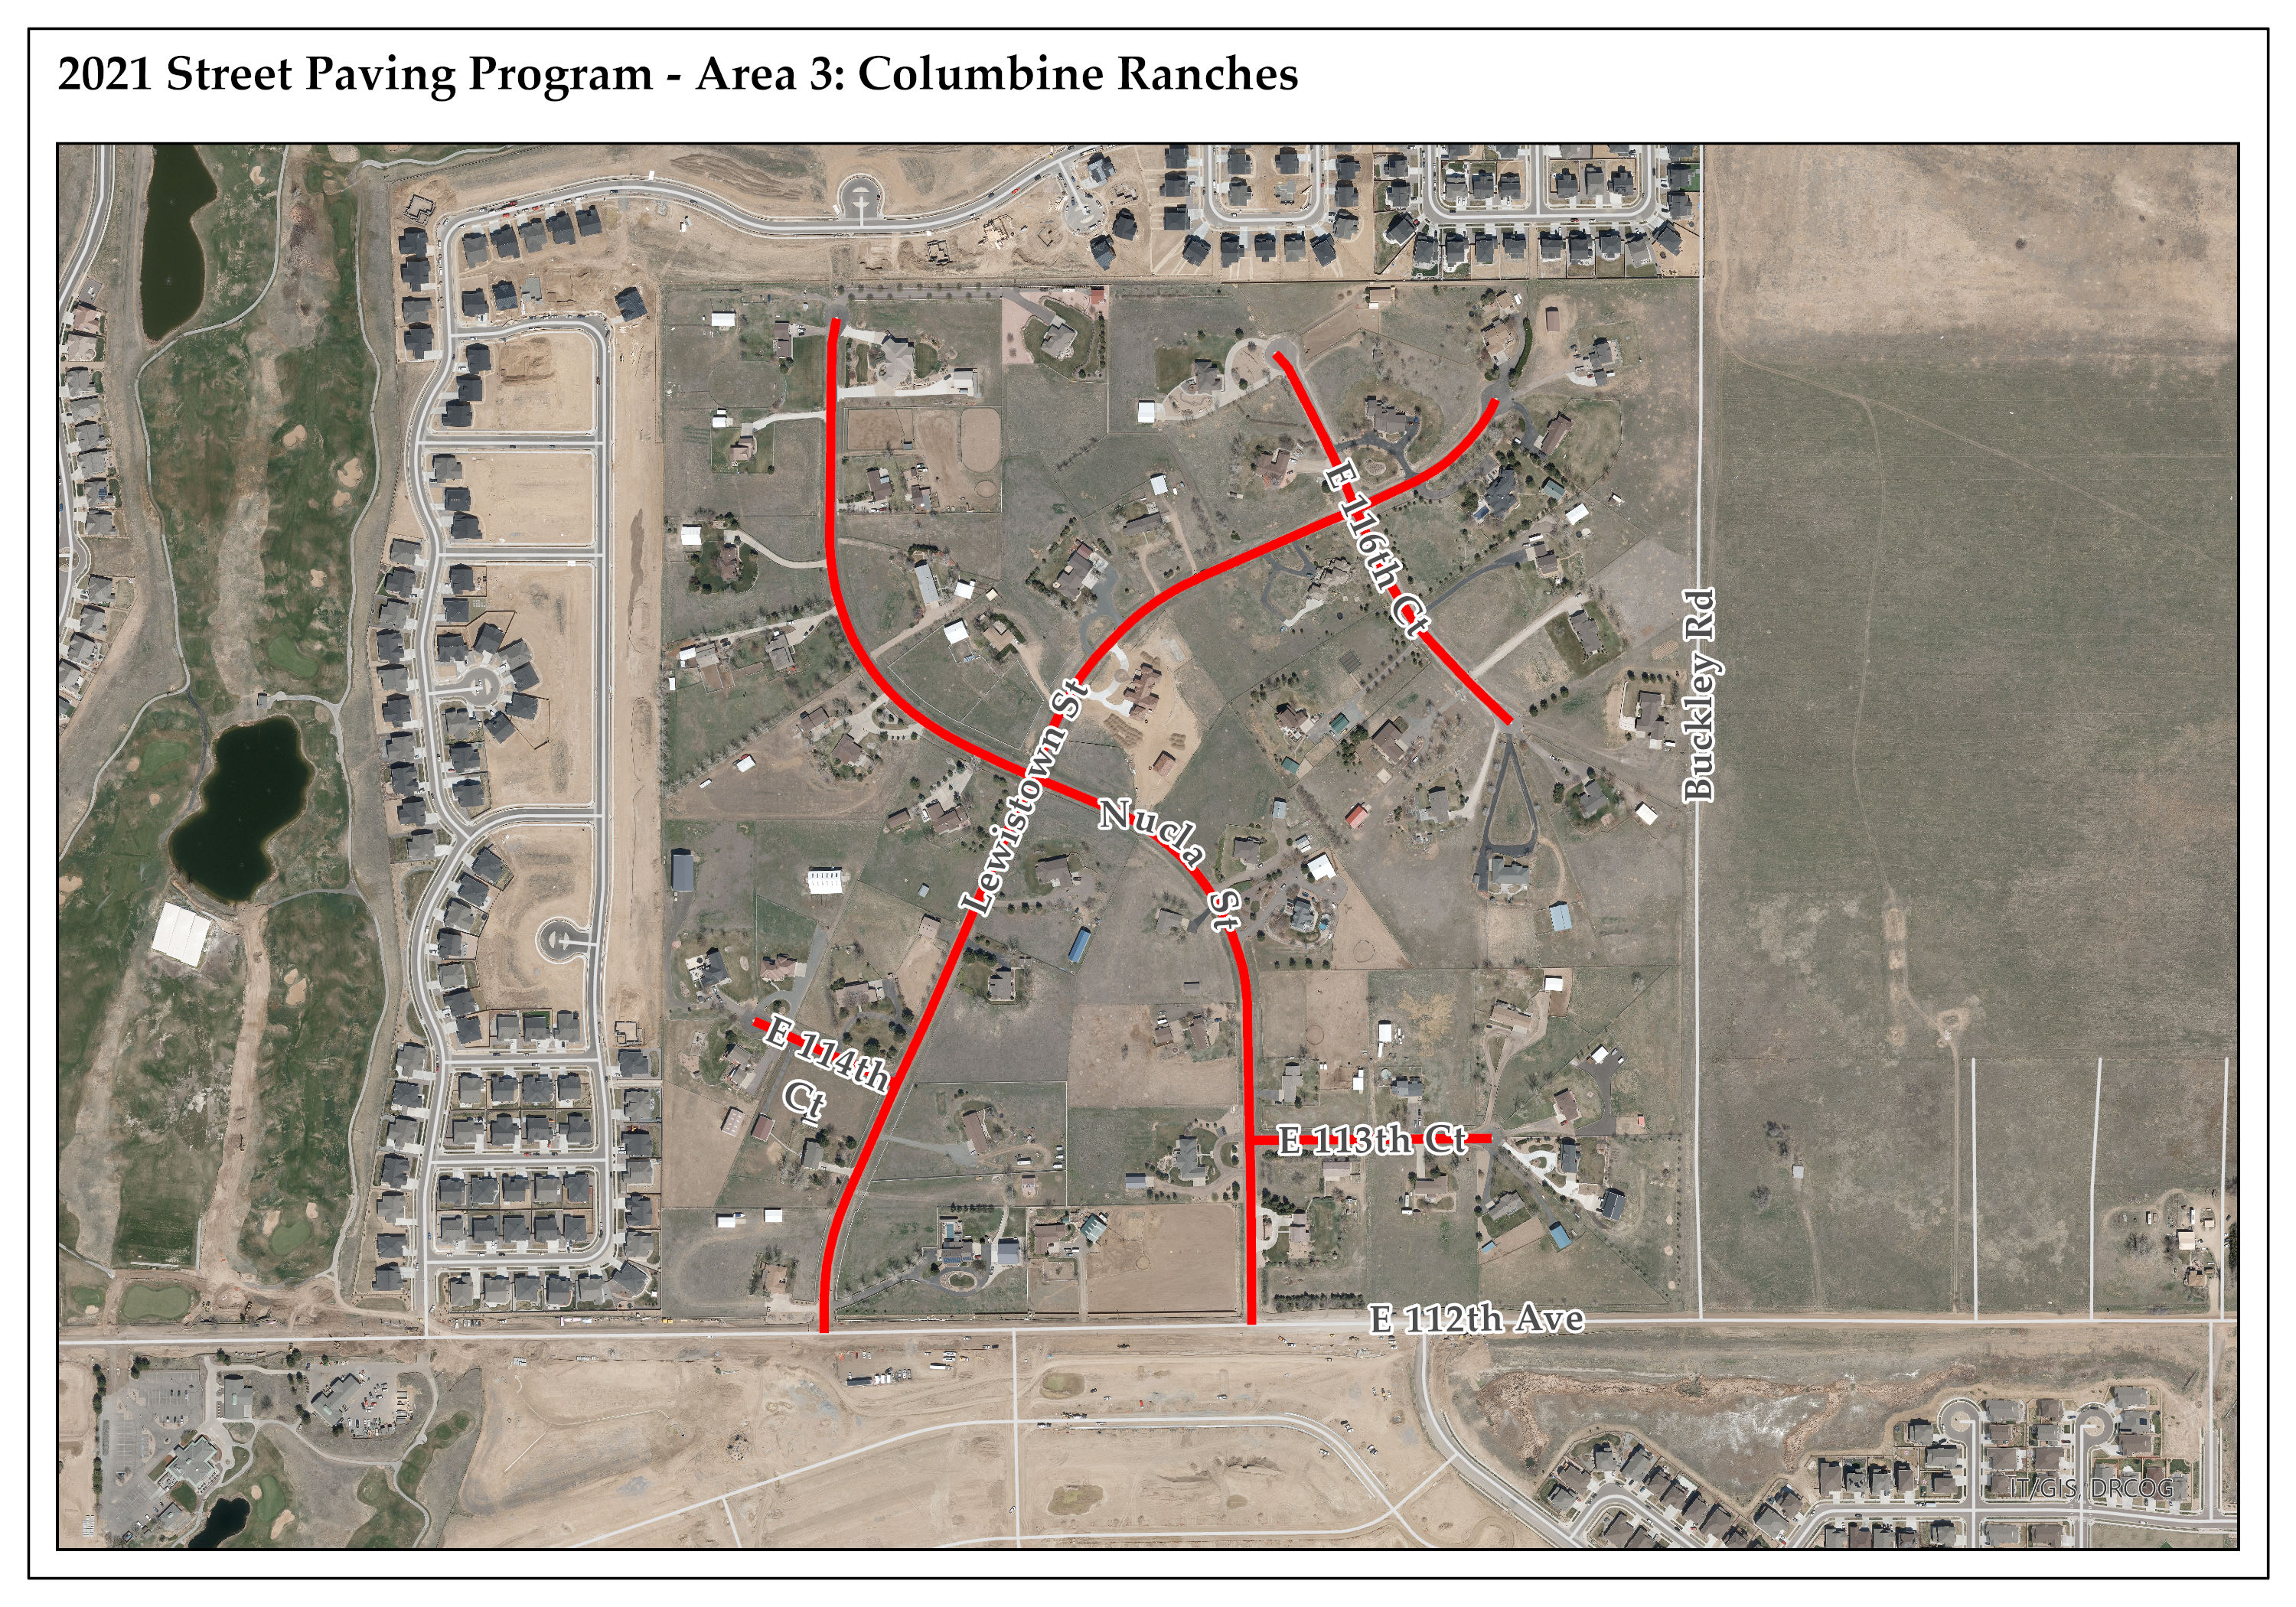 Area 3 – Columbine Ranches